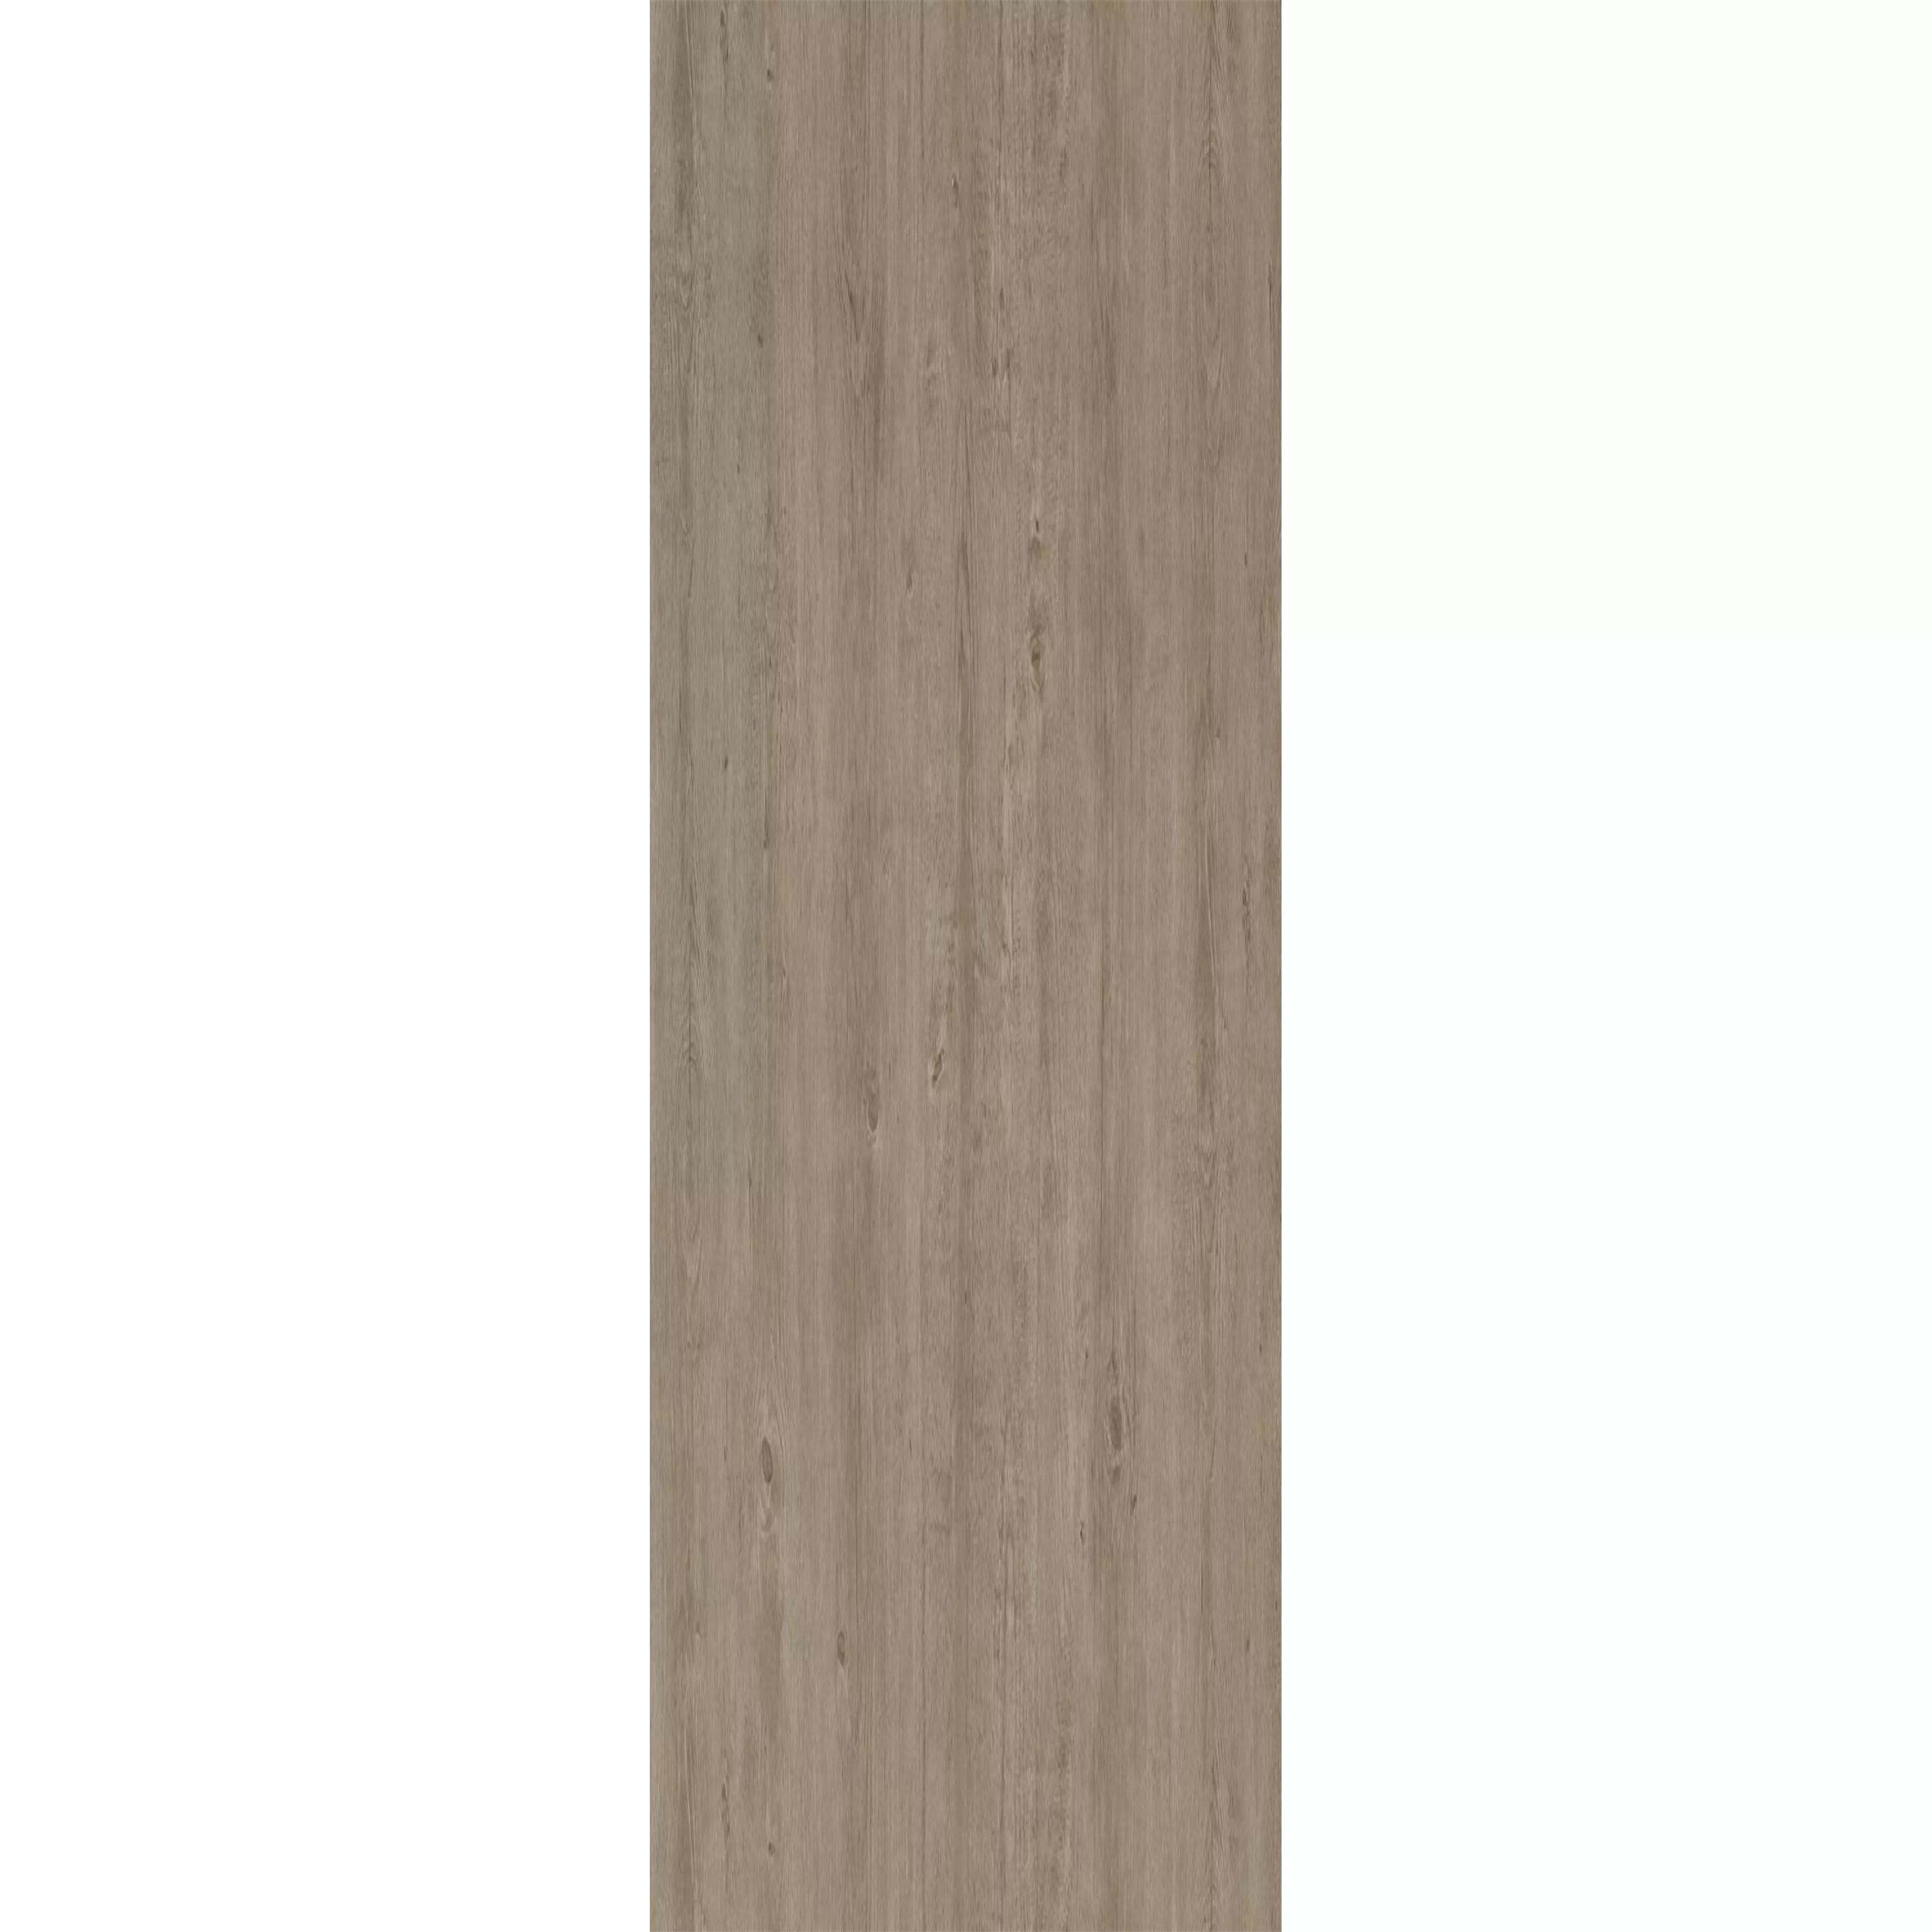 Suelo De Vinilo Sistema De Clic Elderwood Beige Gris 17,2x121cm